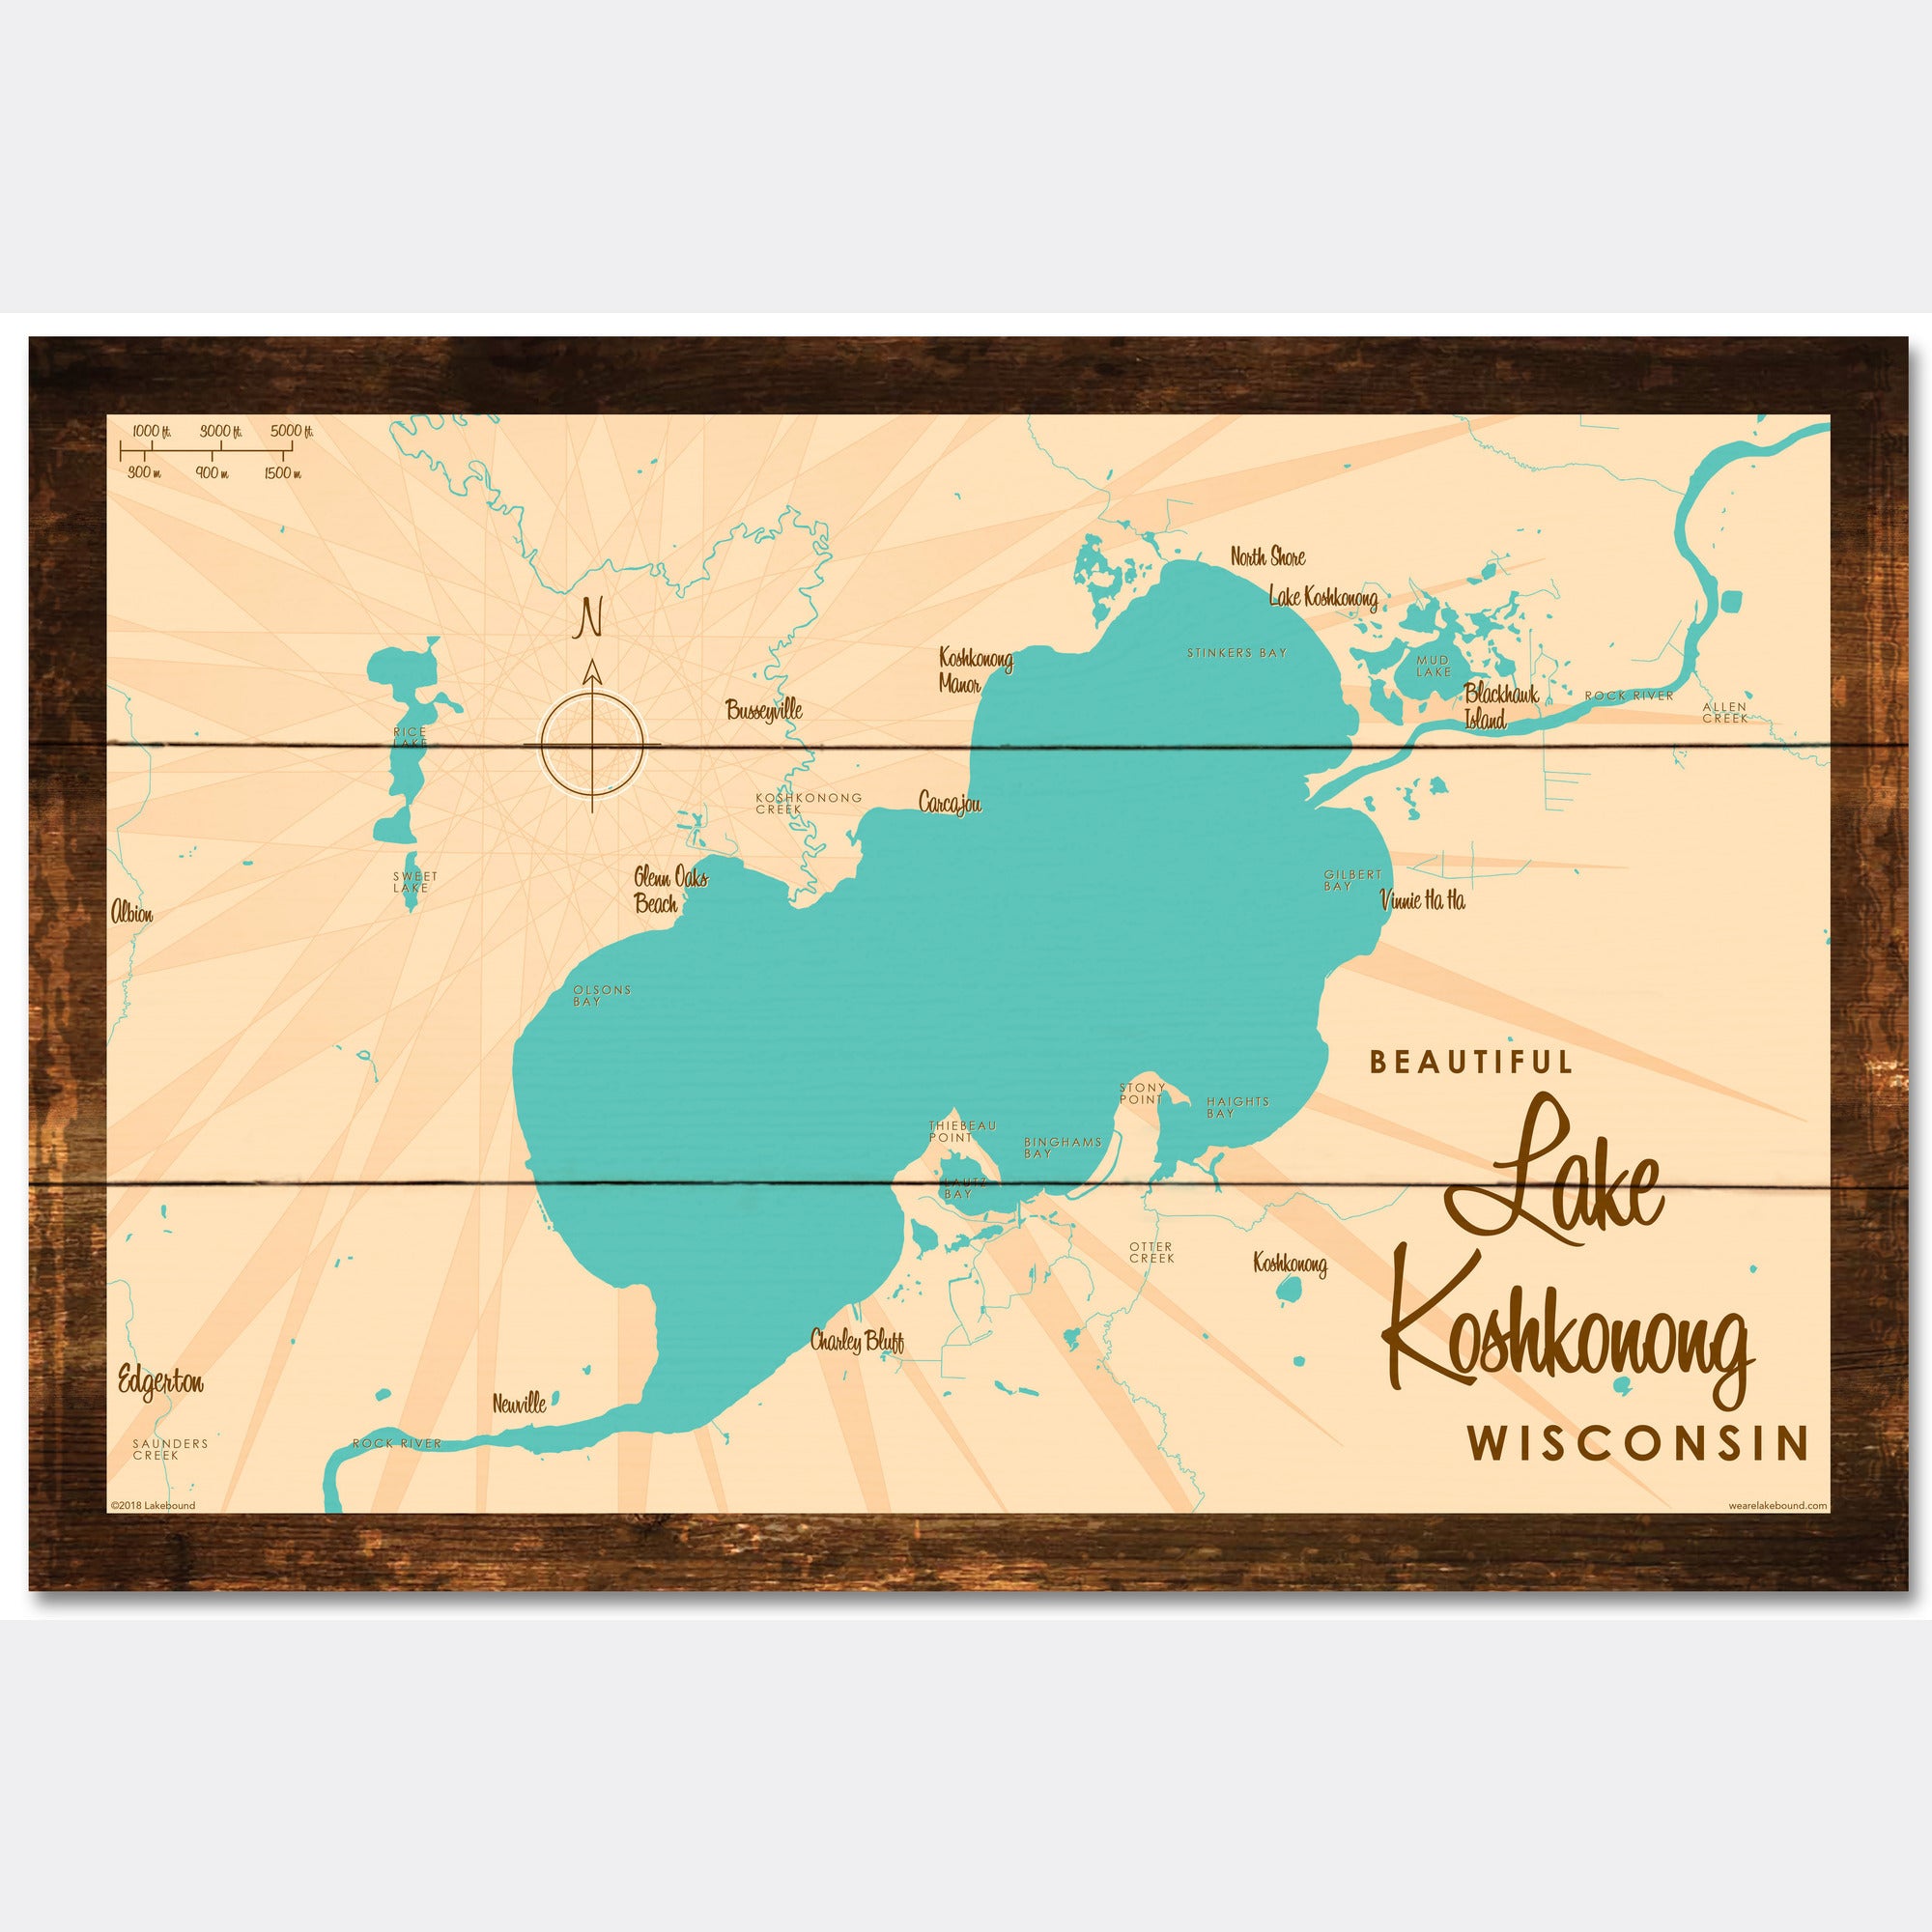 Lake Koshkonong Wisconsin, Rustic Wood Sign Map Art